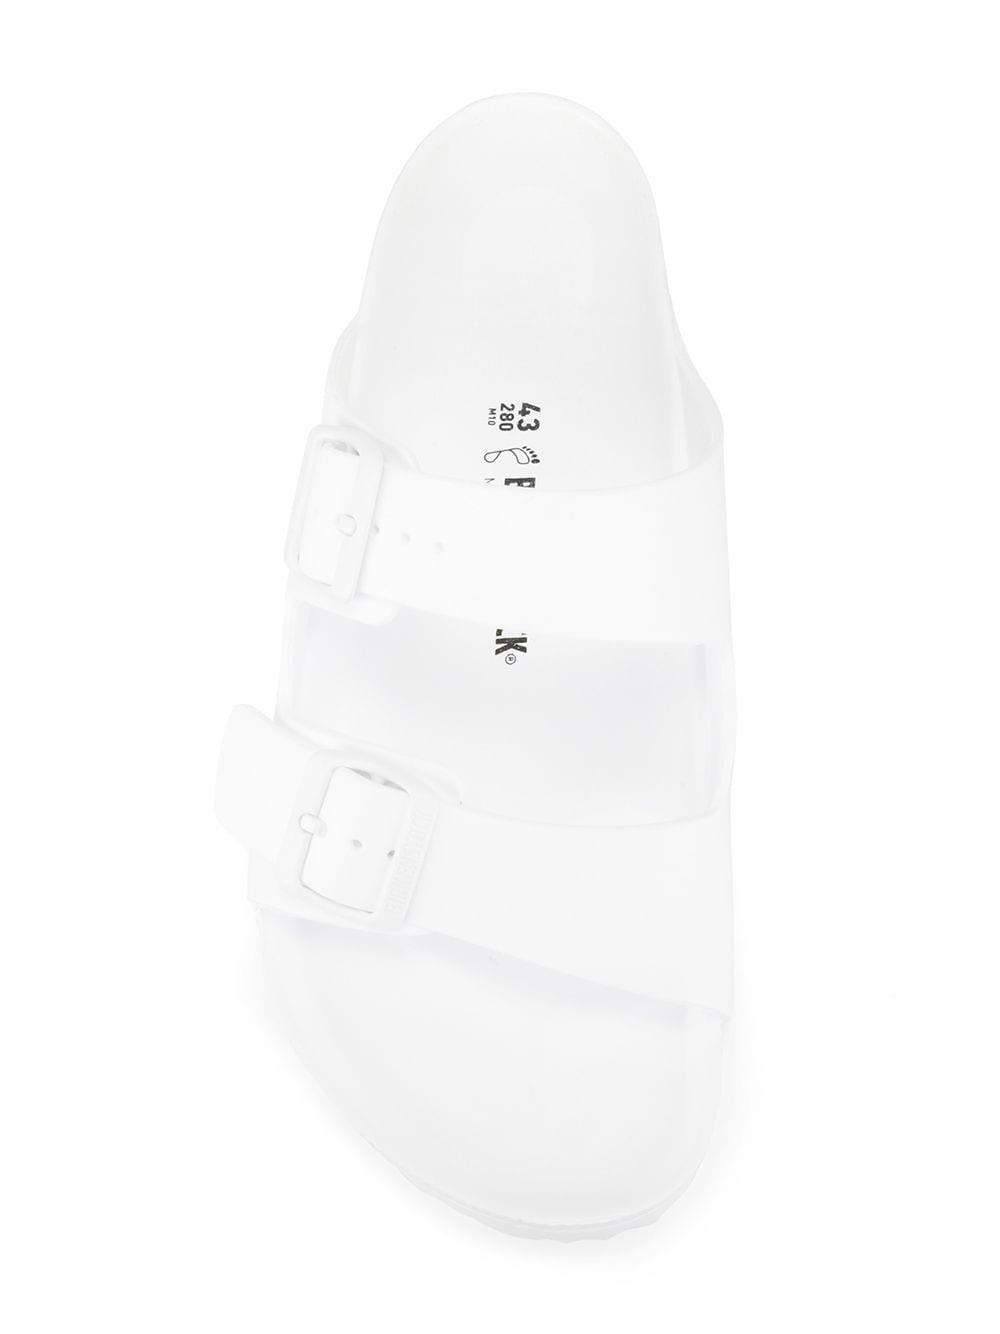 Birkenstock Arizona Eva Sandals in White for Men - Save 97% | Lyst